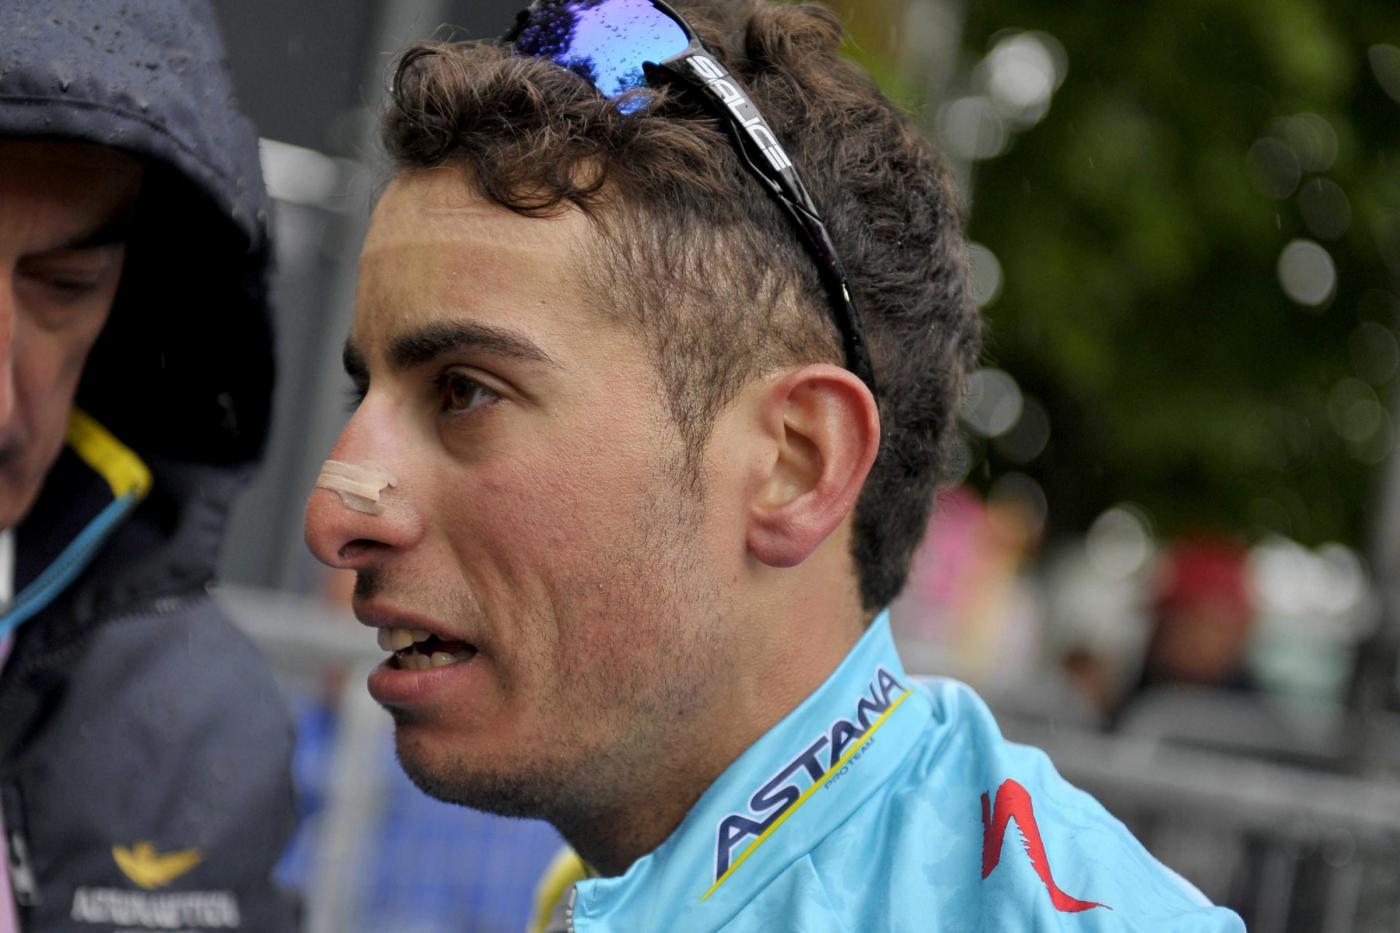 Giro d’Italia 2014: Fabio Aru straordinario a Montecampione